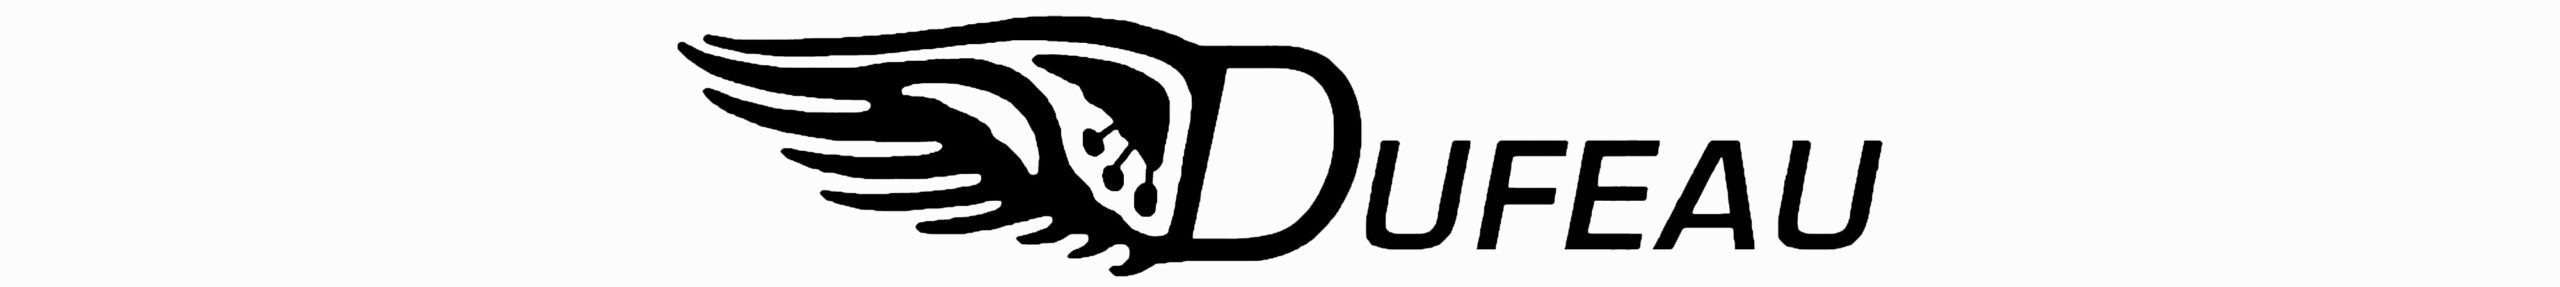 Dufeau logo